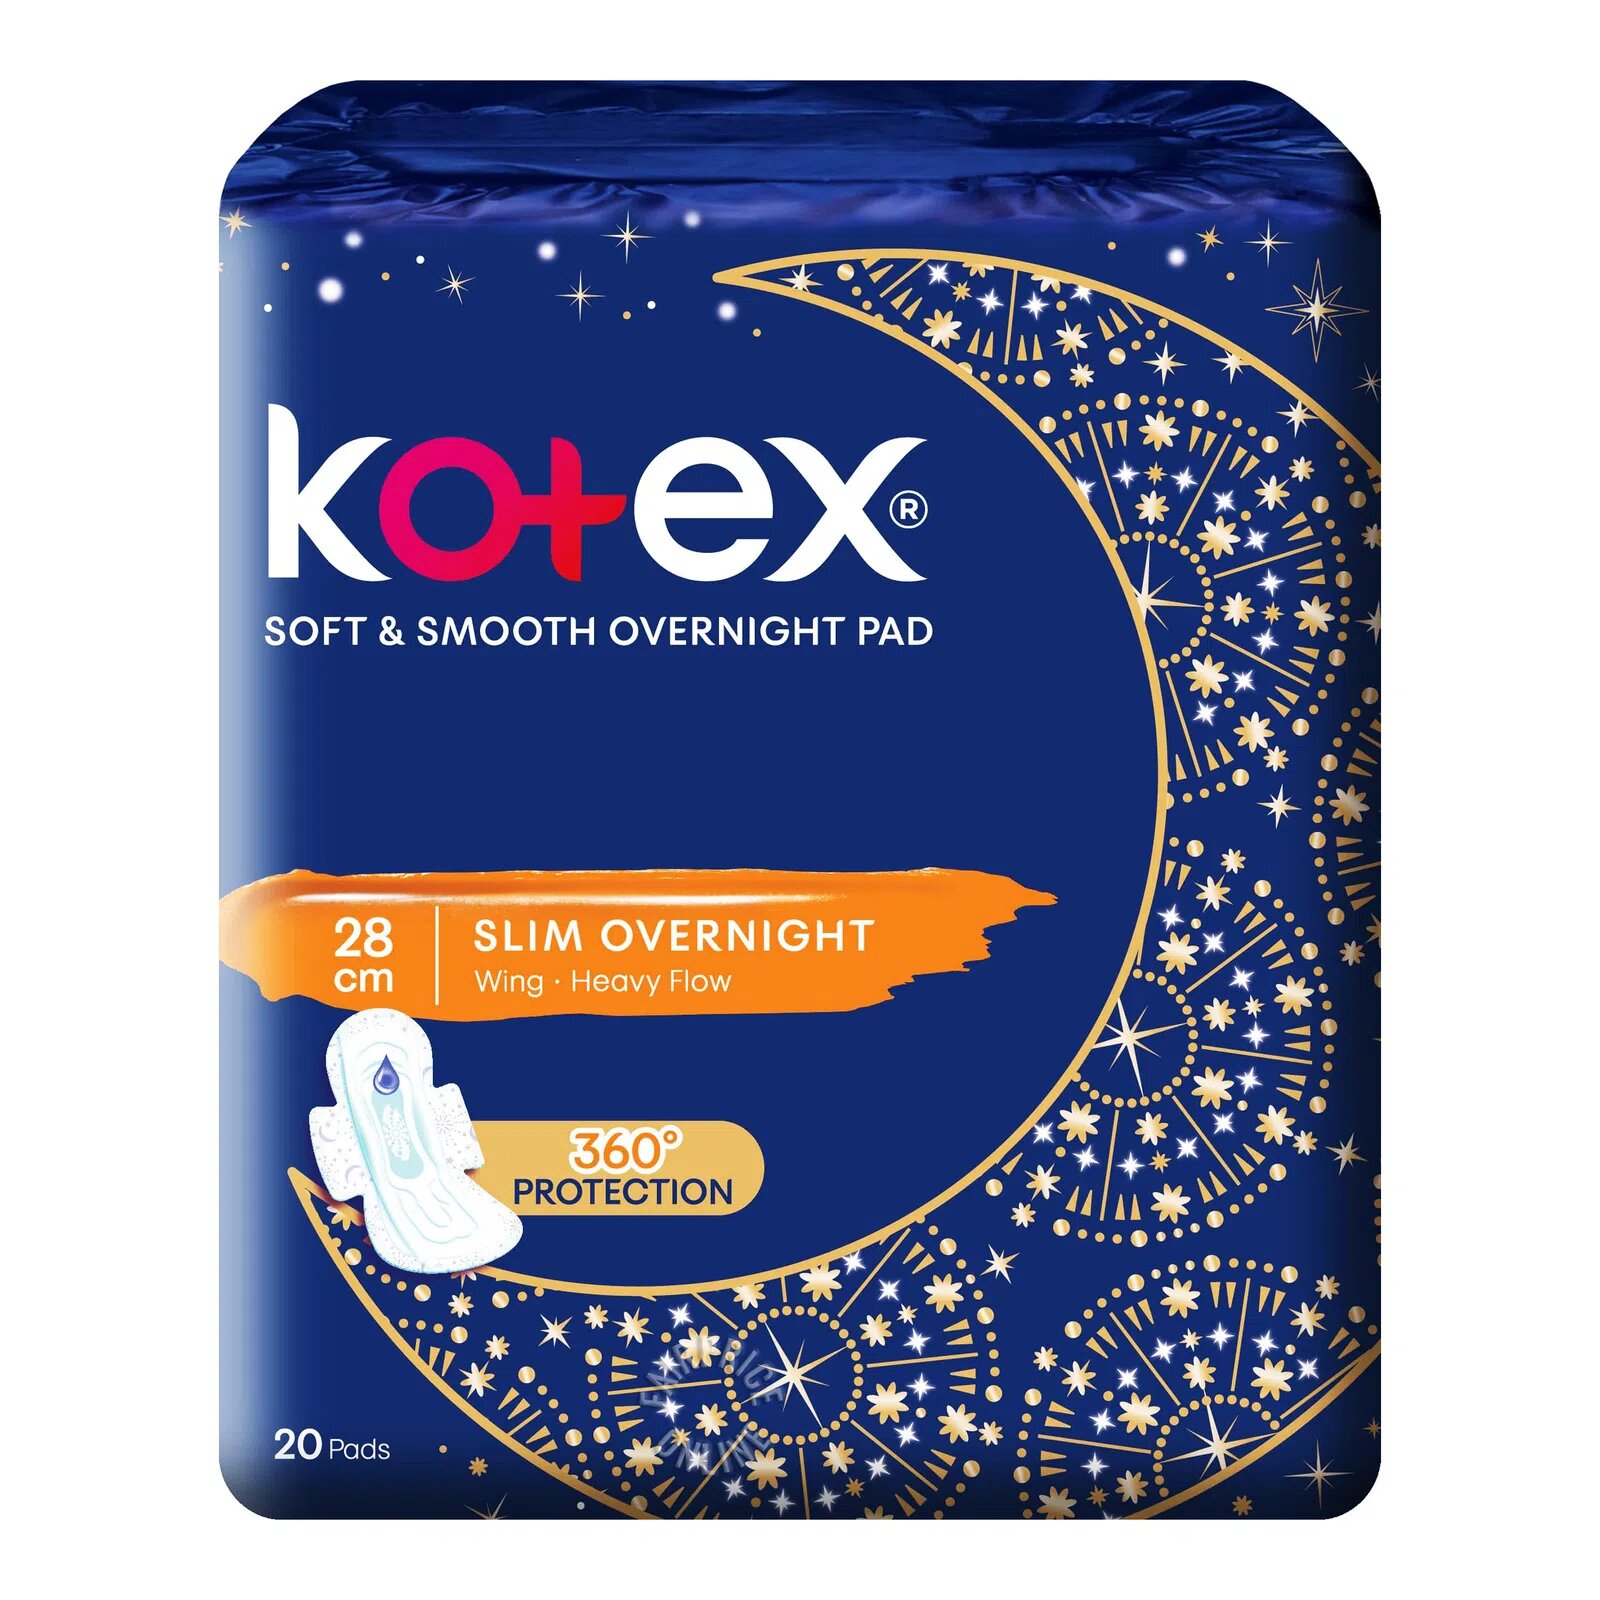 Kotex Soft & Smooth Slim Overnight Wing Pads - Heavy(28cm)